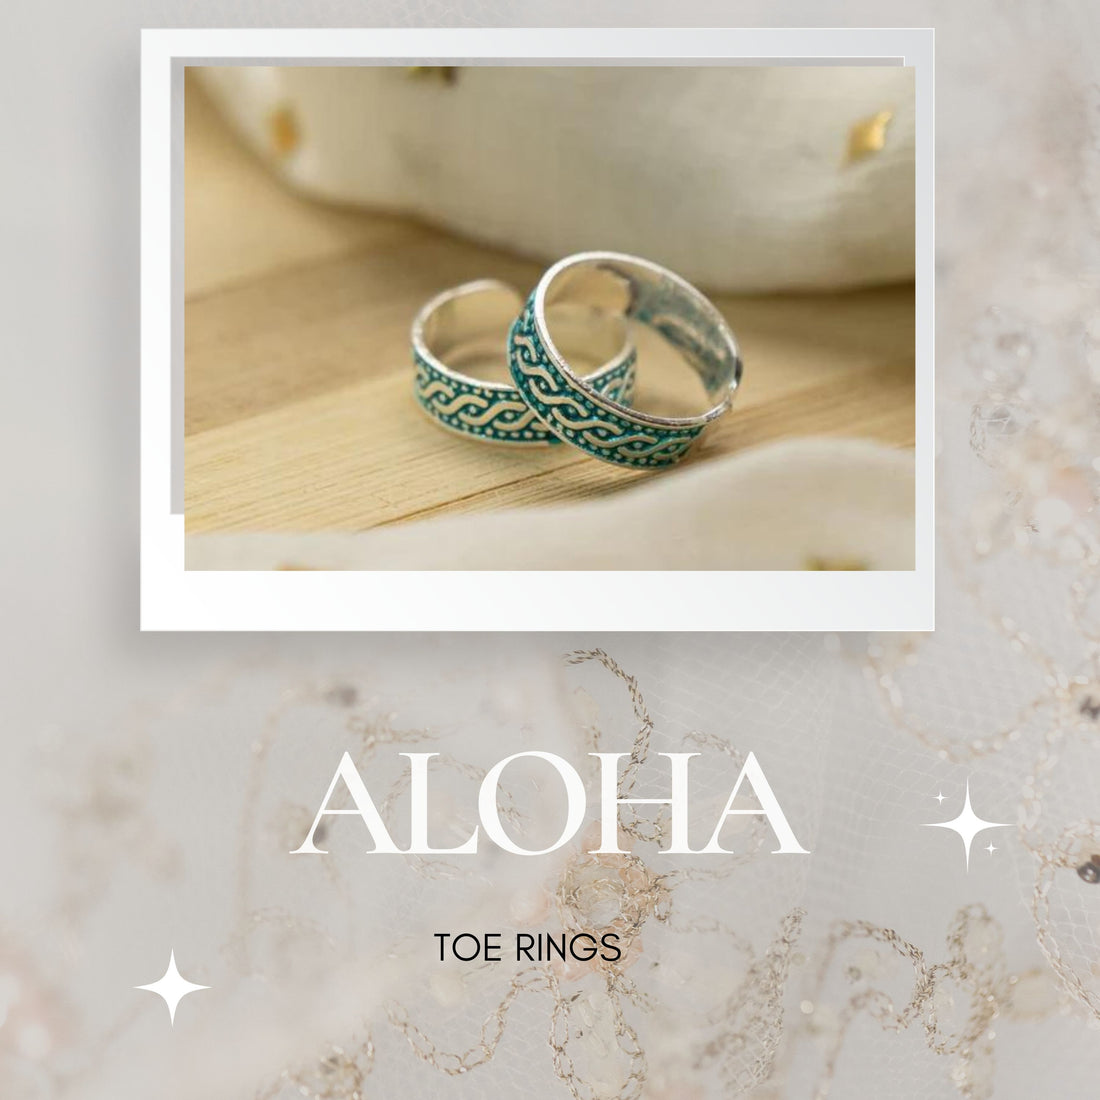 Aloha Toe Rings: Embracing Island Vibes for Your Feet